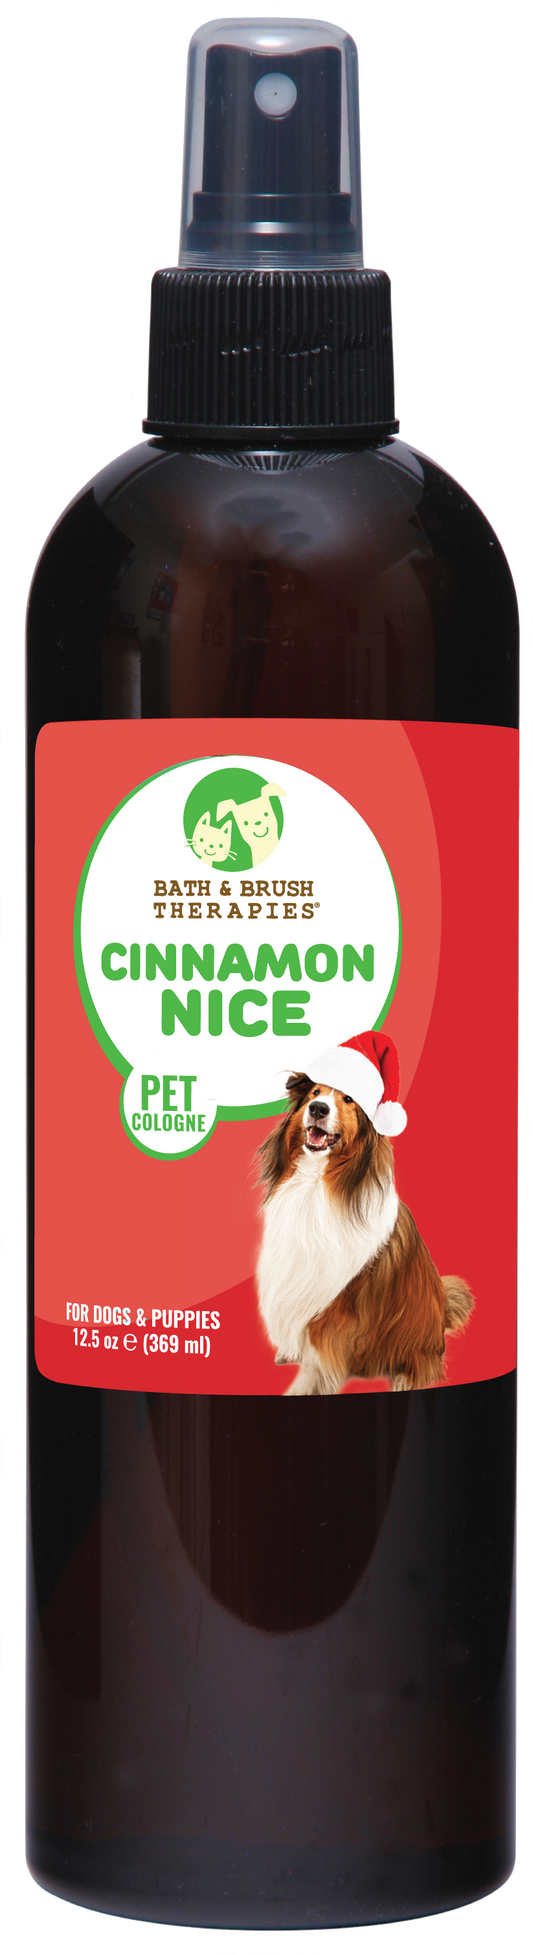 Cinnamon Nice Pet Cologne | Bath & Brush Therapies®